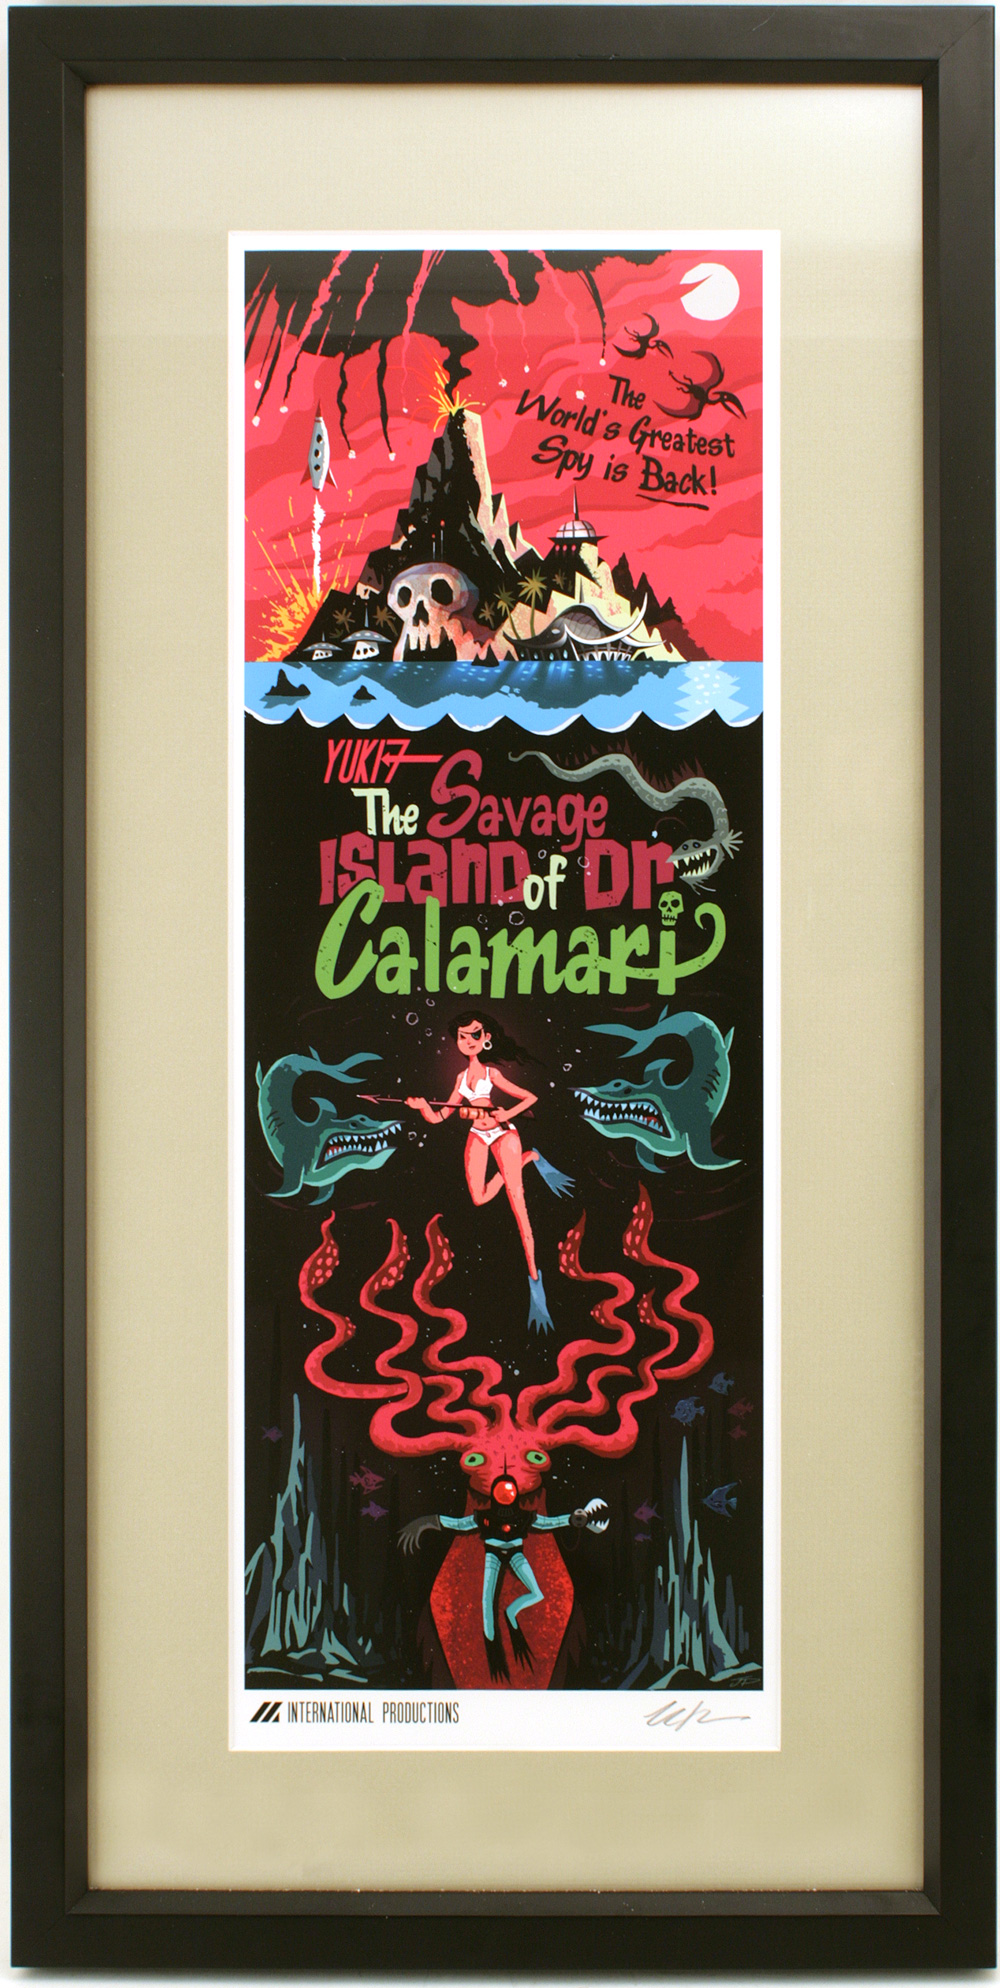 The Savage Island of Dr. Calamari, Justin Parpan